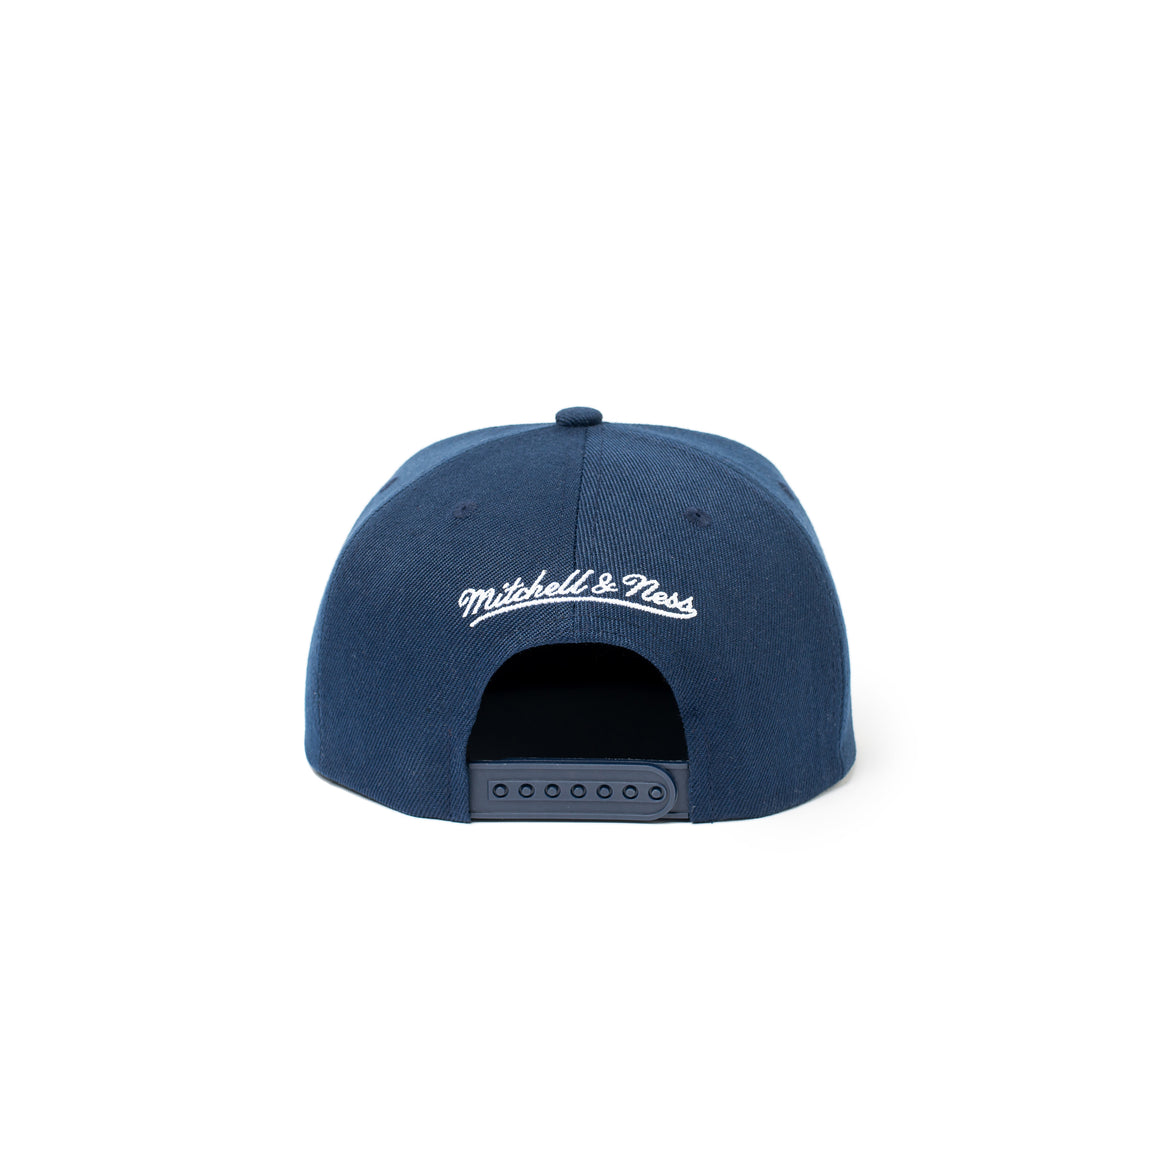 Centre x Mitchell & Ness Dallas Script Snapback Hat (Navy) - Centre x Mitchell & Ness Dallas Script Snapback Hat (Navy) - 